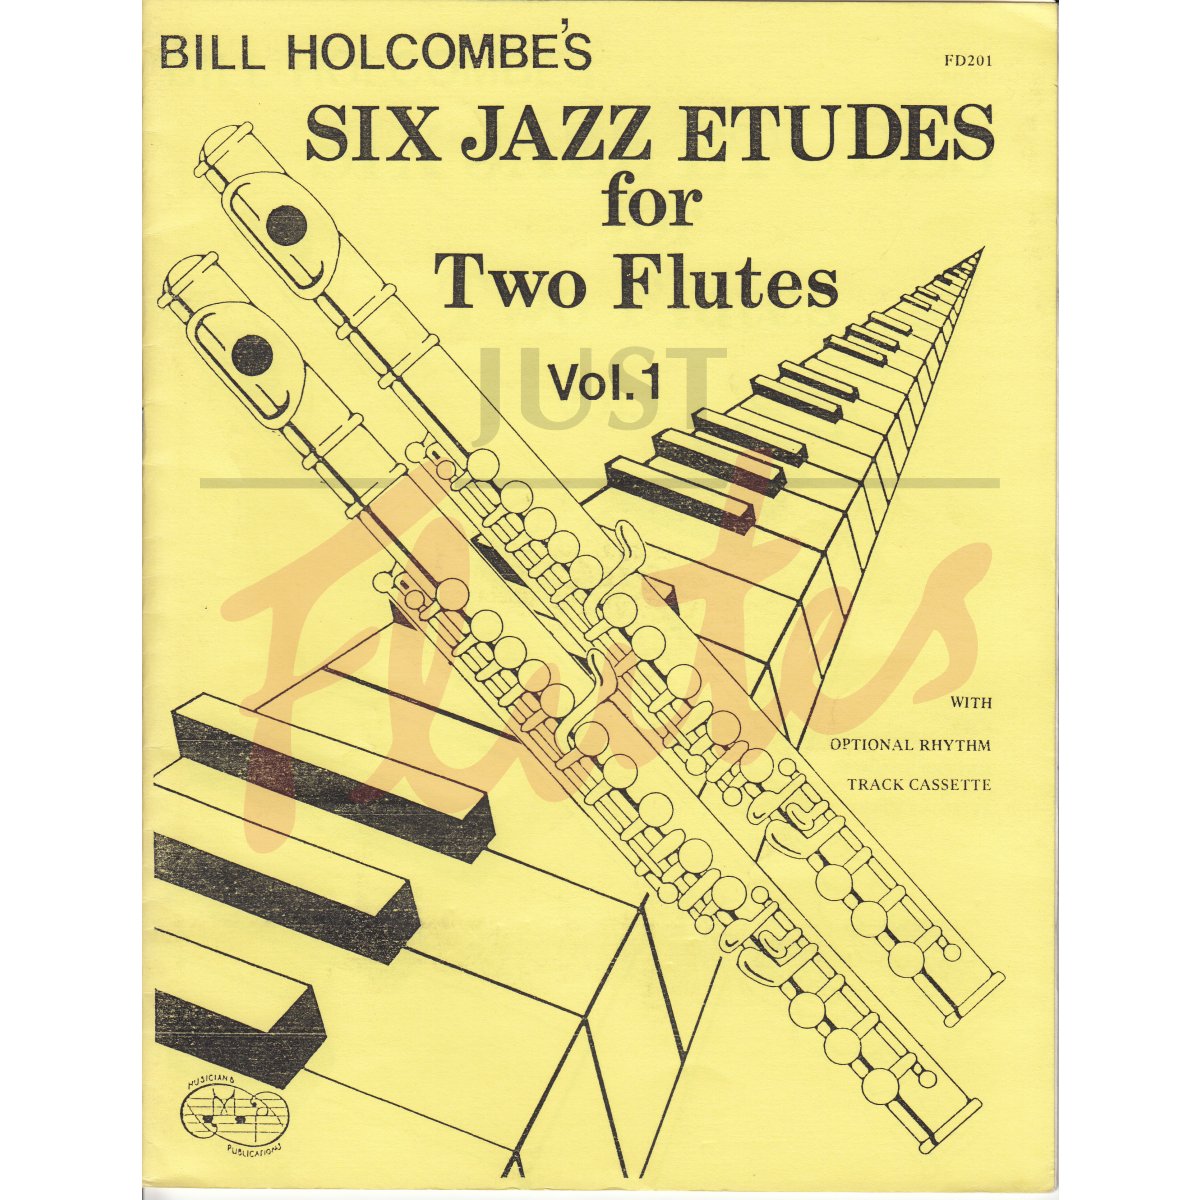 Six Jazz Etudes for Two Flutes Vol.1